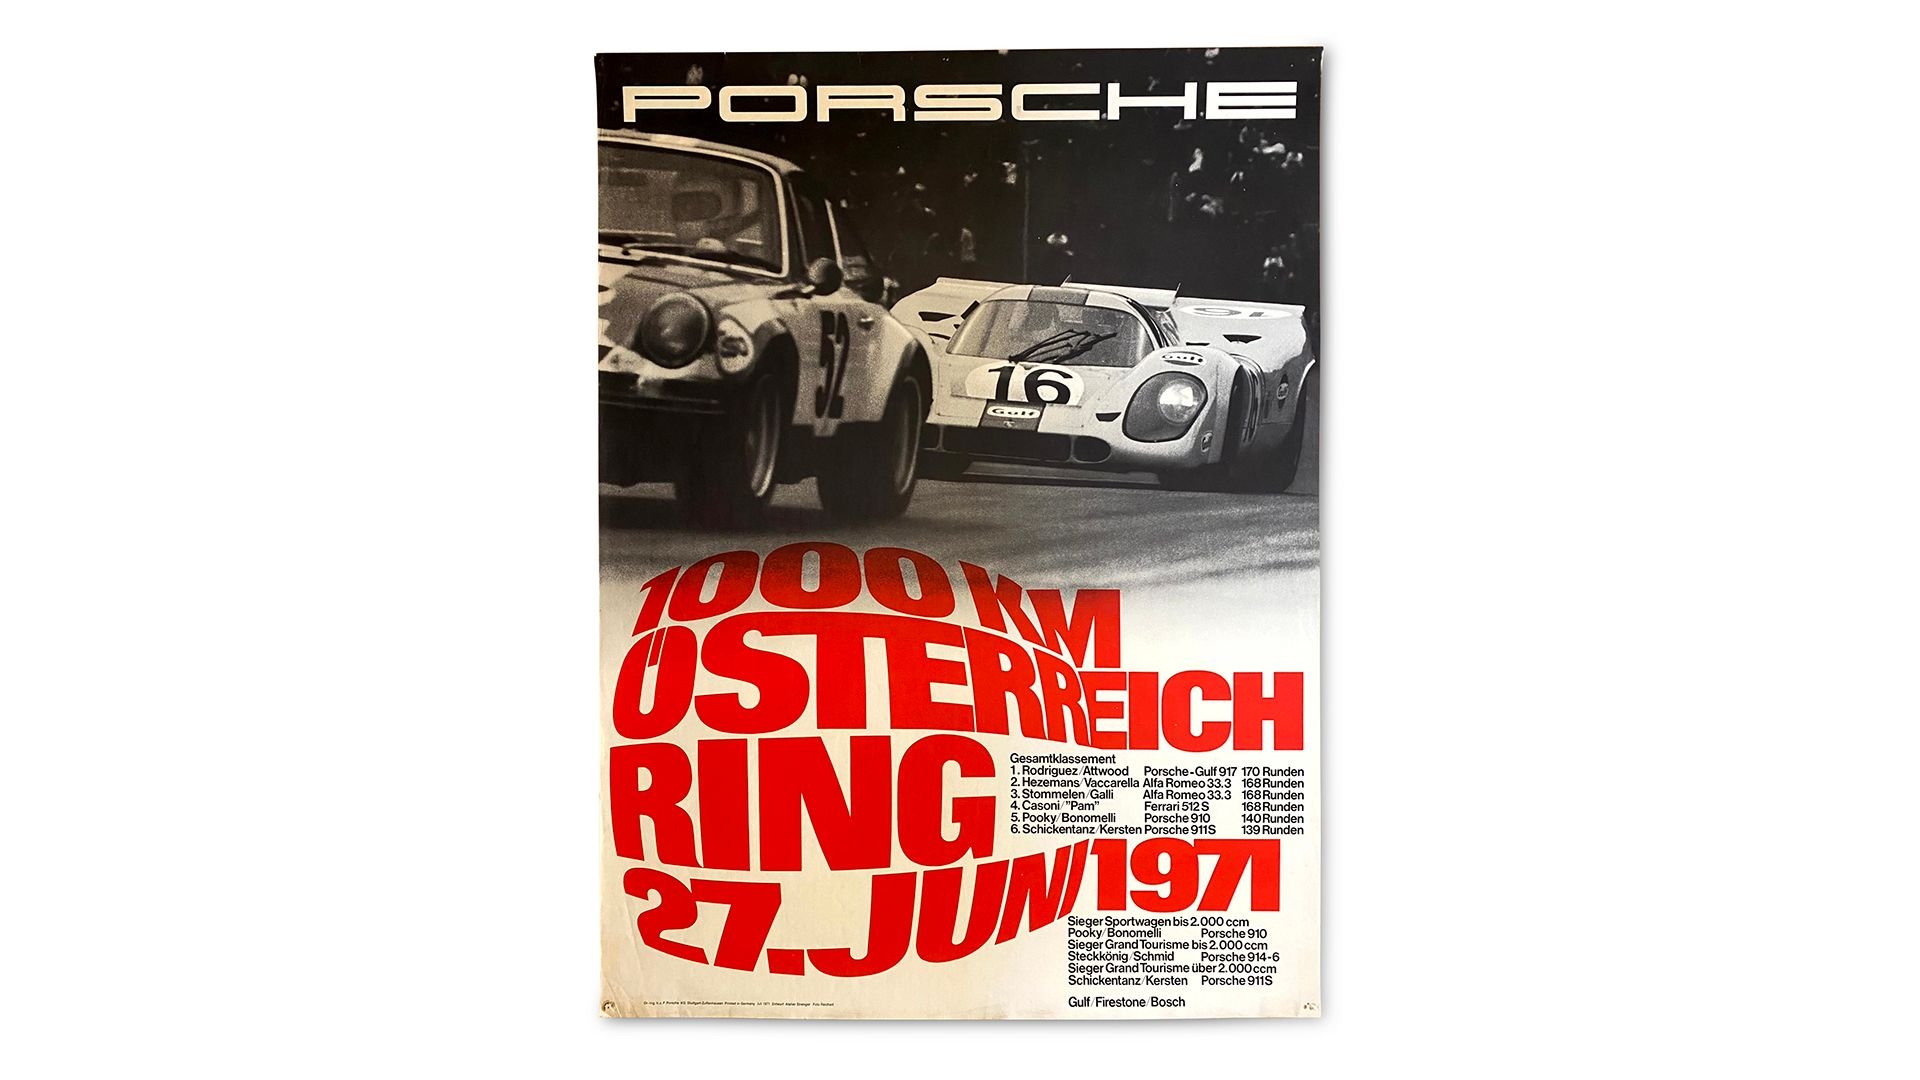 Group of 13 porsche sports racing prototype 917 factory racing posters 1969 1971